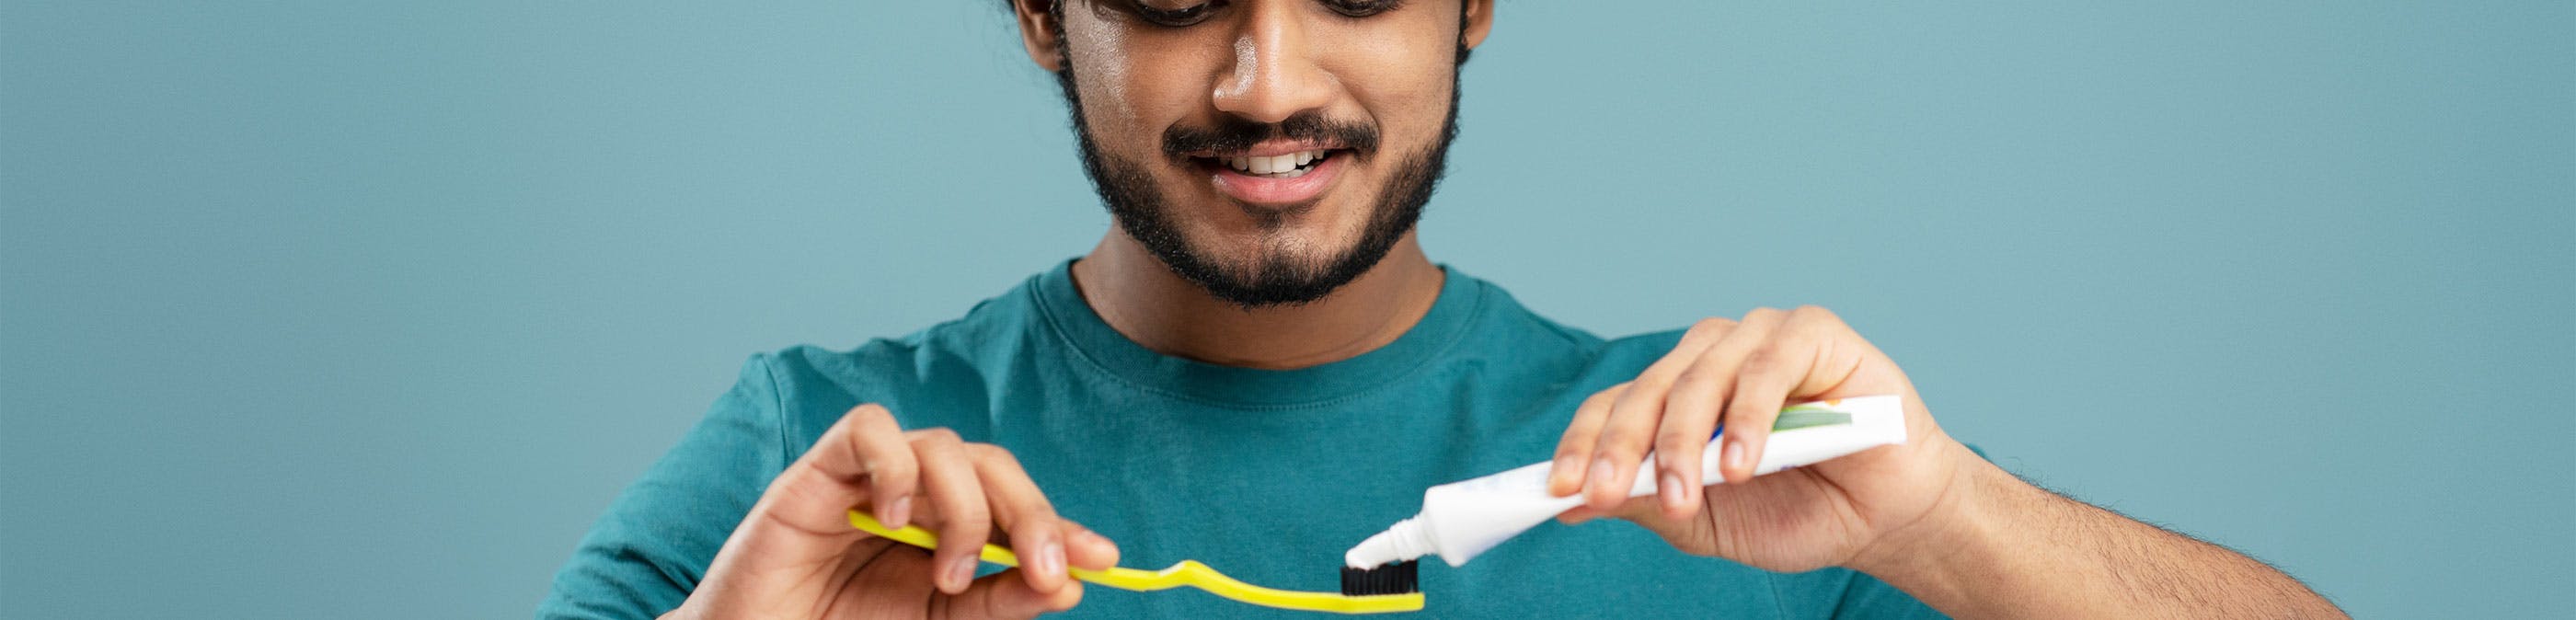 Man applying toothpaste to toothbrush